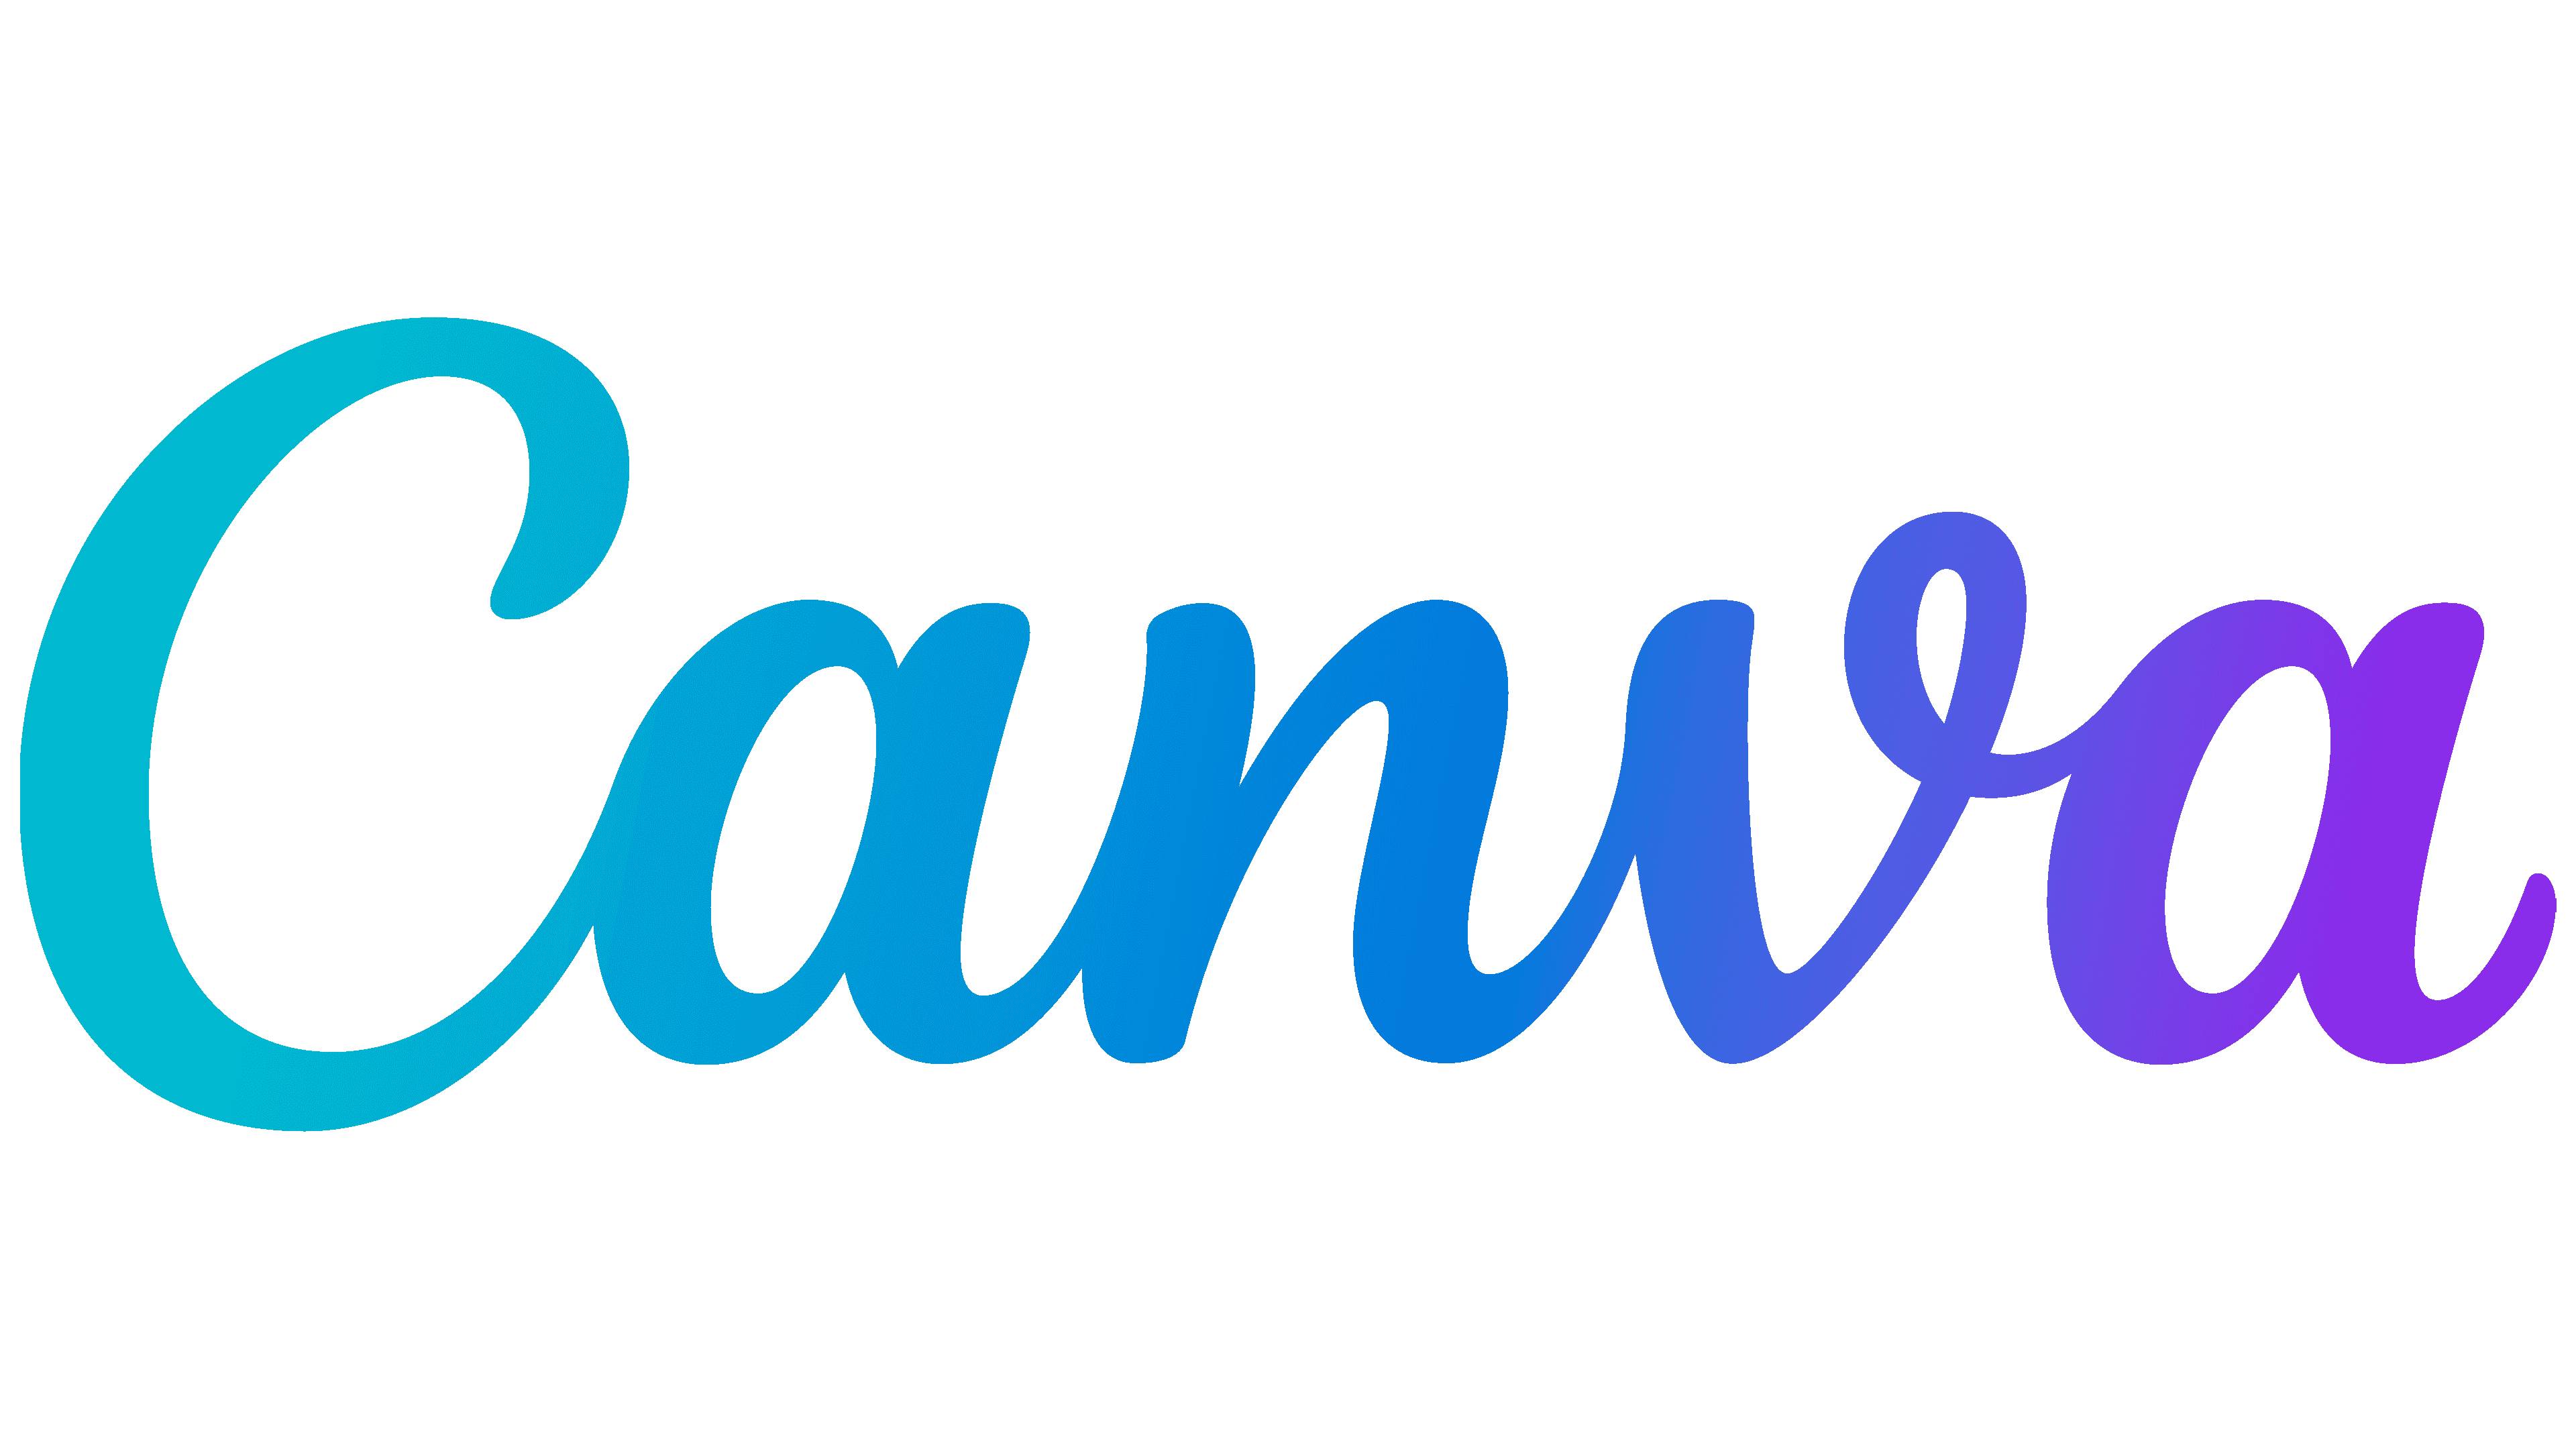 Canva graphic design platform with a new logo